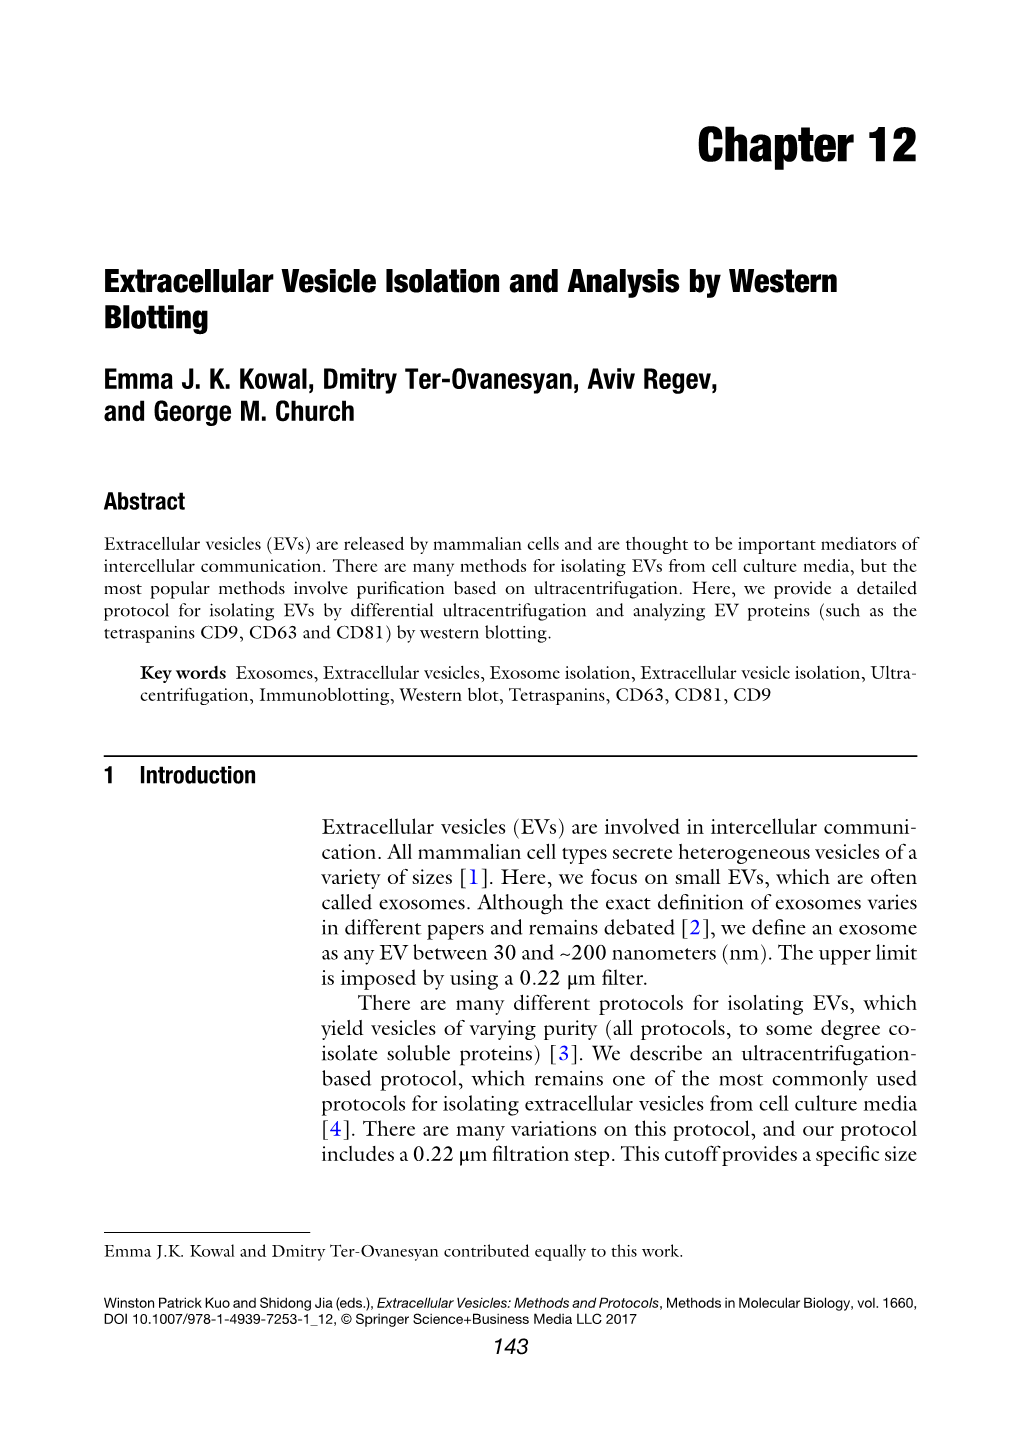 Extracellular Vesicle Isolation and Analysis by Western Blotting